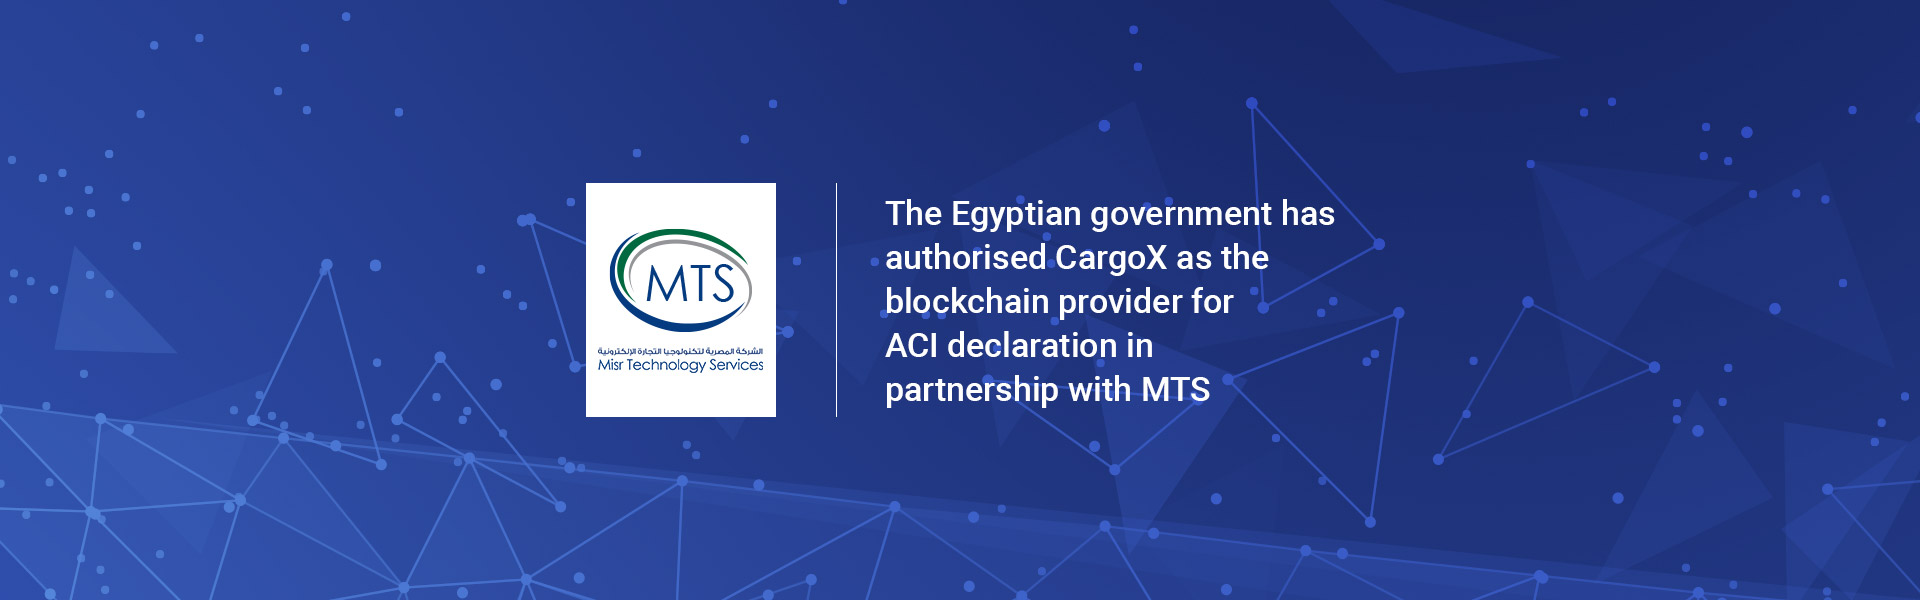 Egypt authorizes CargoX as the blockchain document transfer gateway for ACI. Image: CargoX